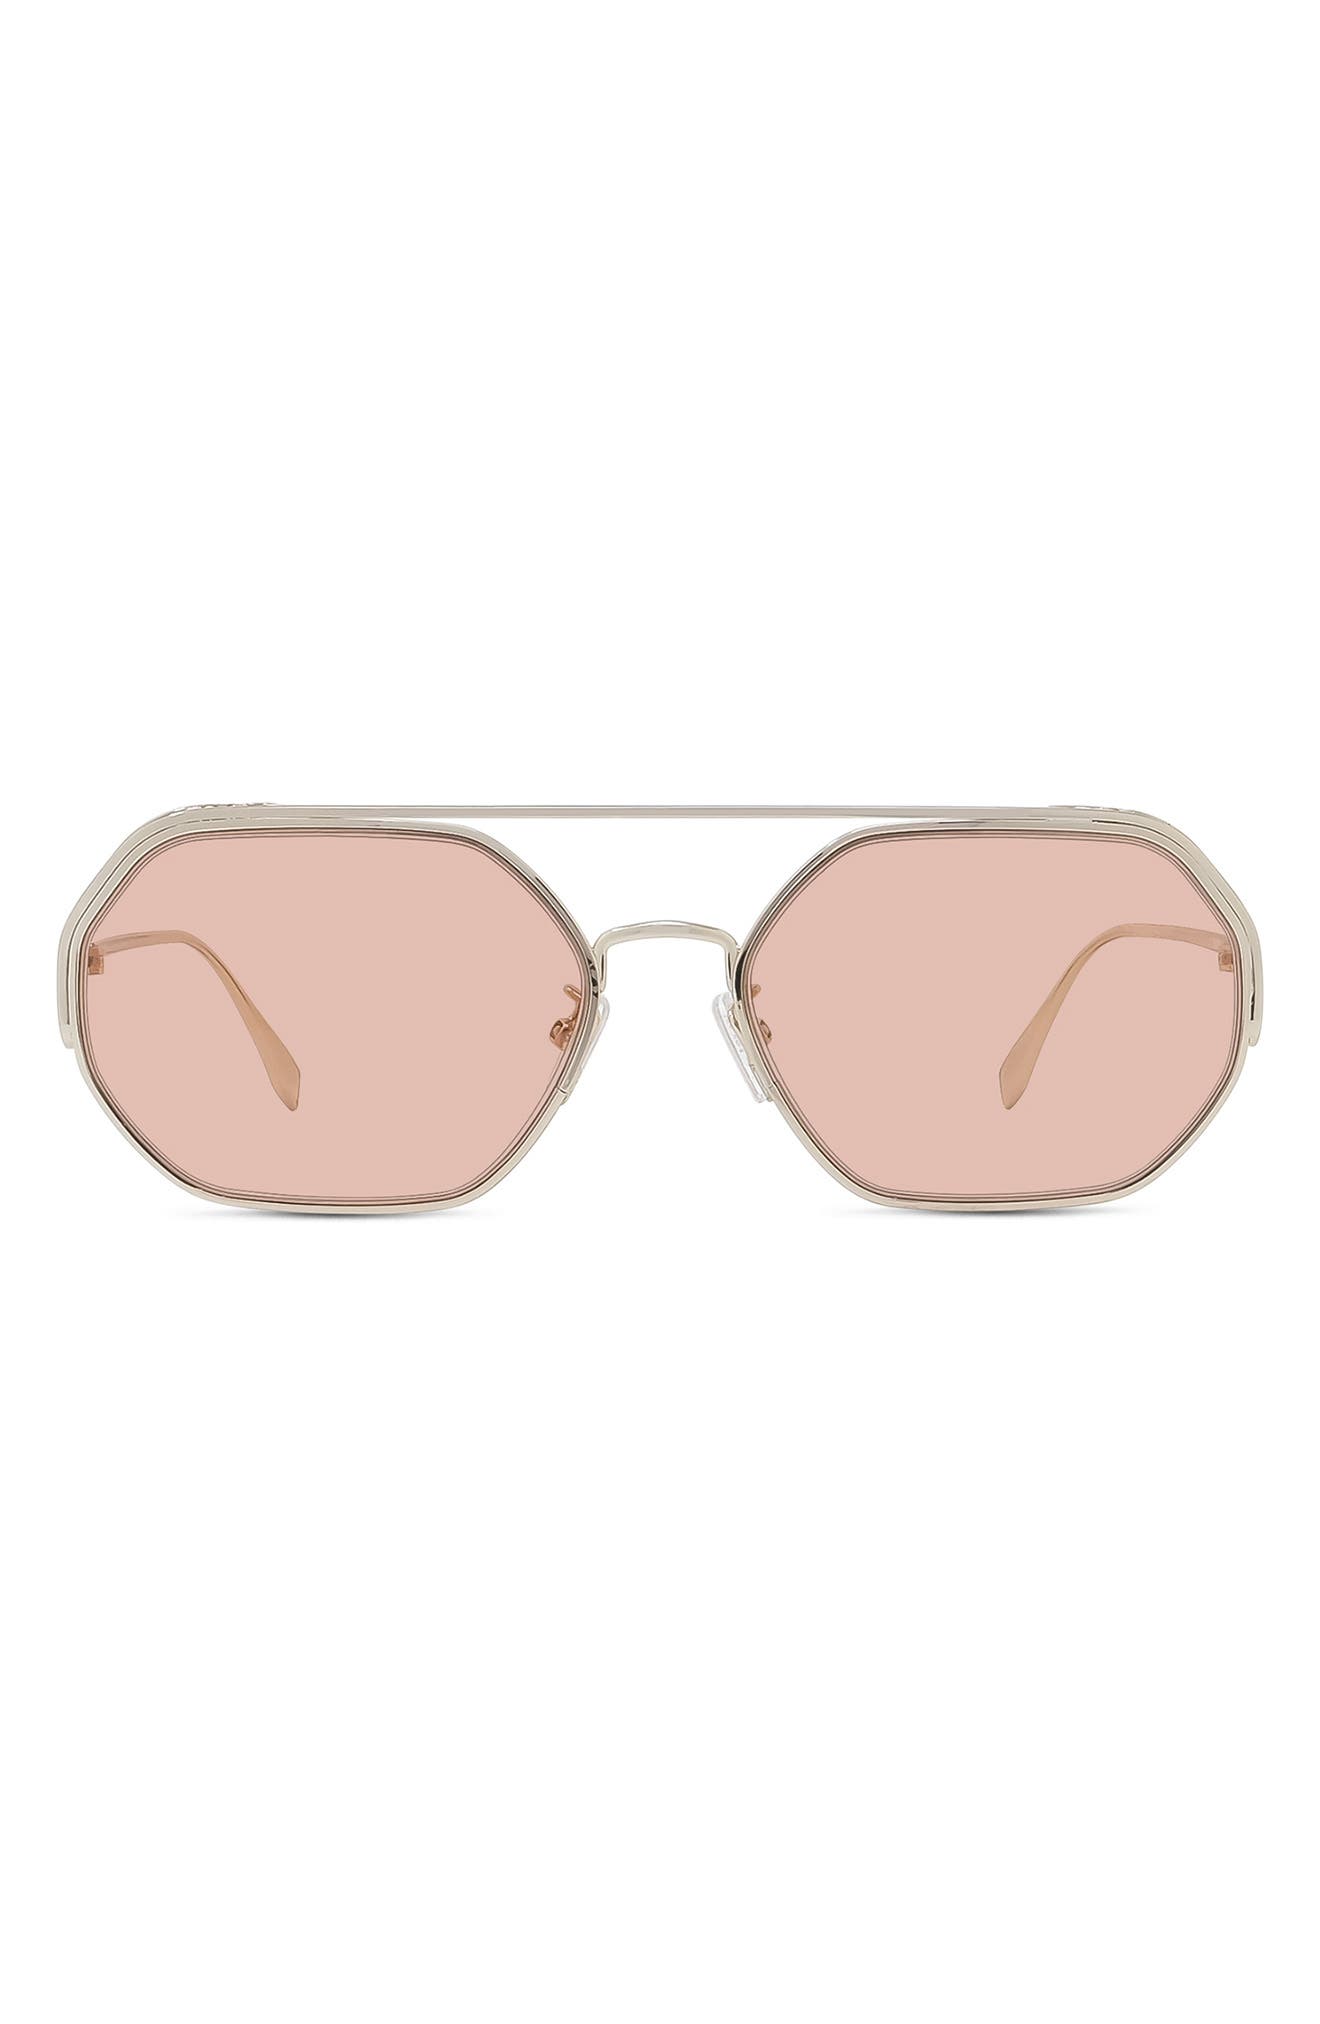 Fendi O'Lock 57mm Geometric Sunglasses in Shiny Gold Dh /Bordeaux at Nordstrom